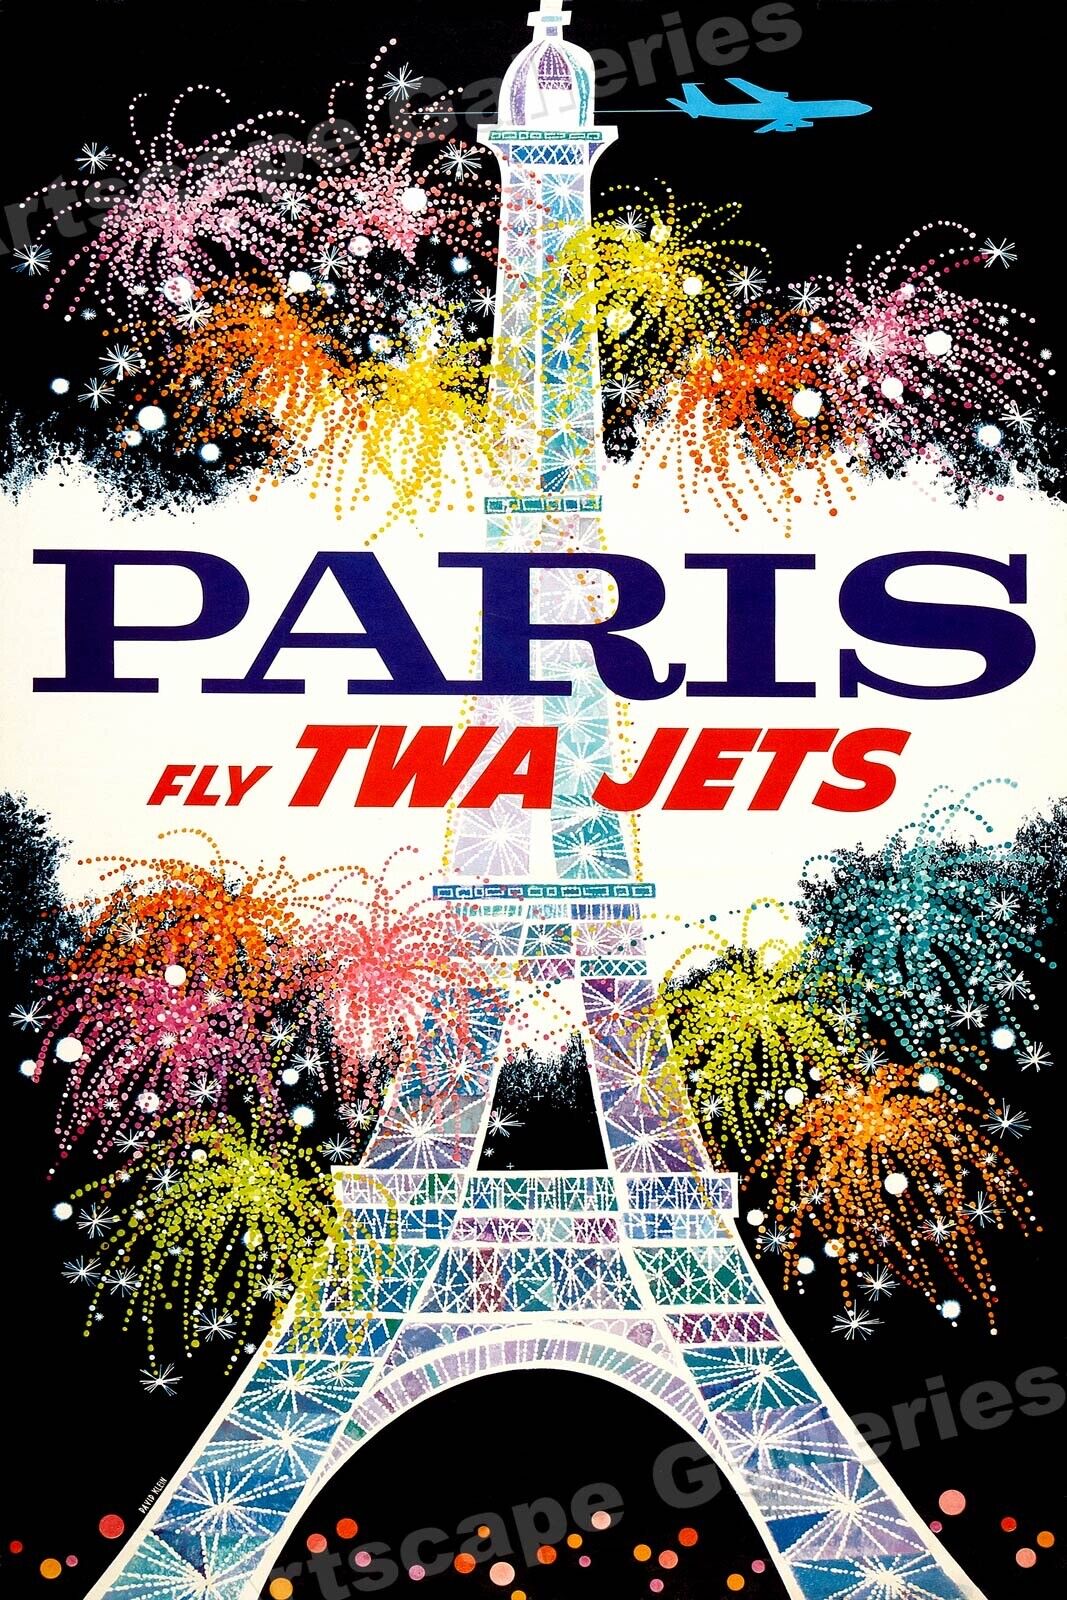 Paris - Fly TWA 1962 Eiffel Tower Vintage Style Air Travel Poster - 24x36